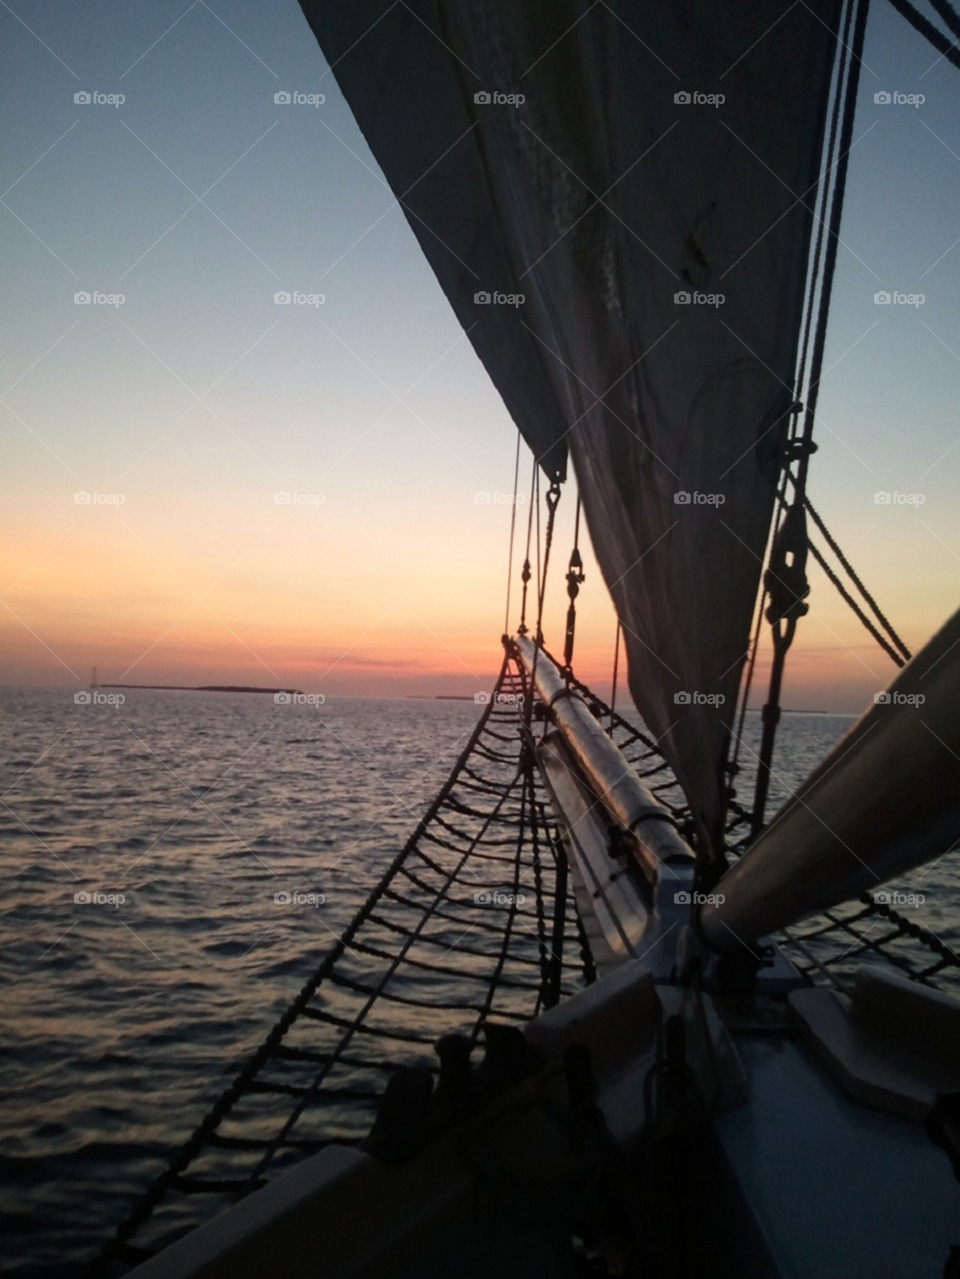 Sunset Sailing. Taken aboard the Western Union tall ship in Key West, Fl